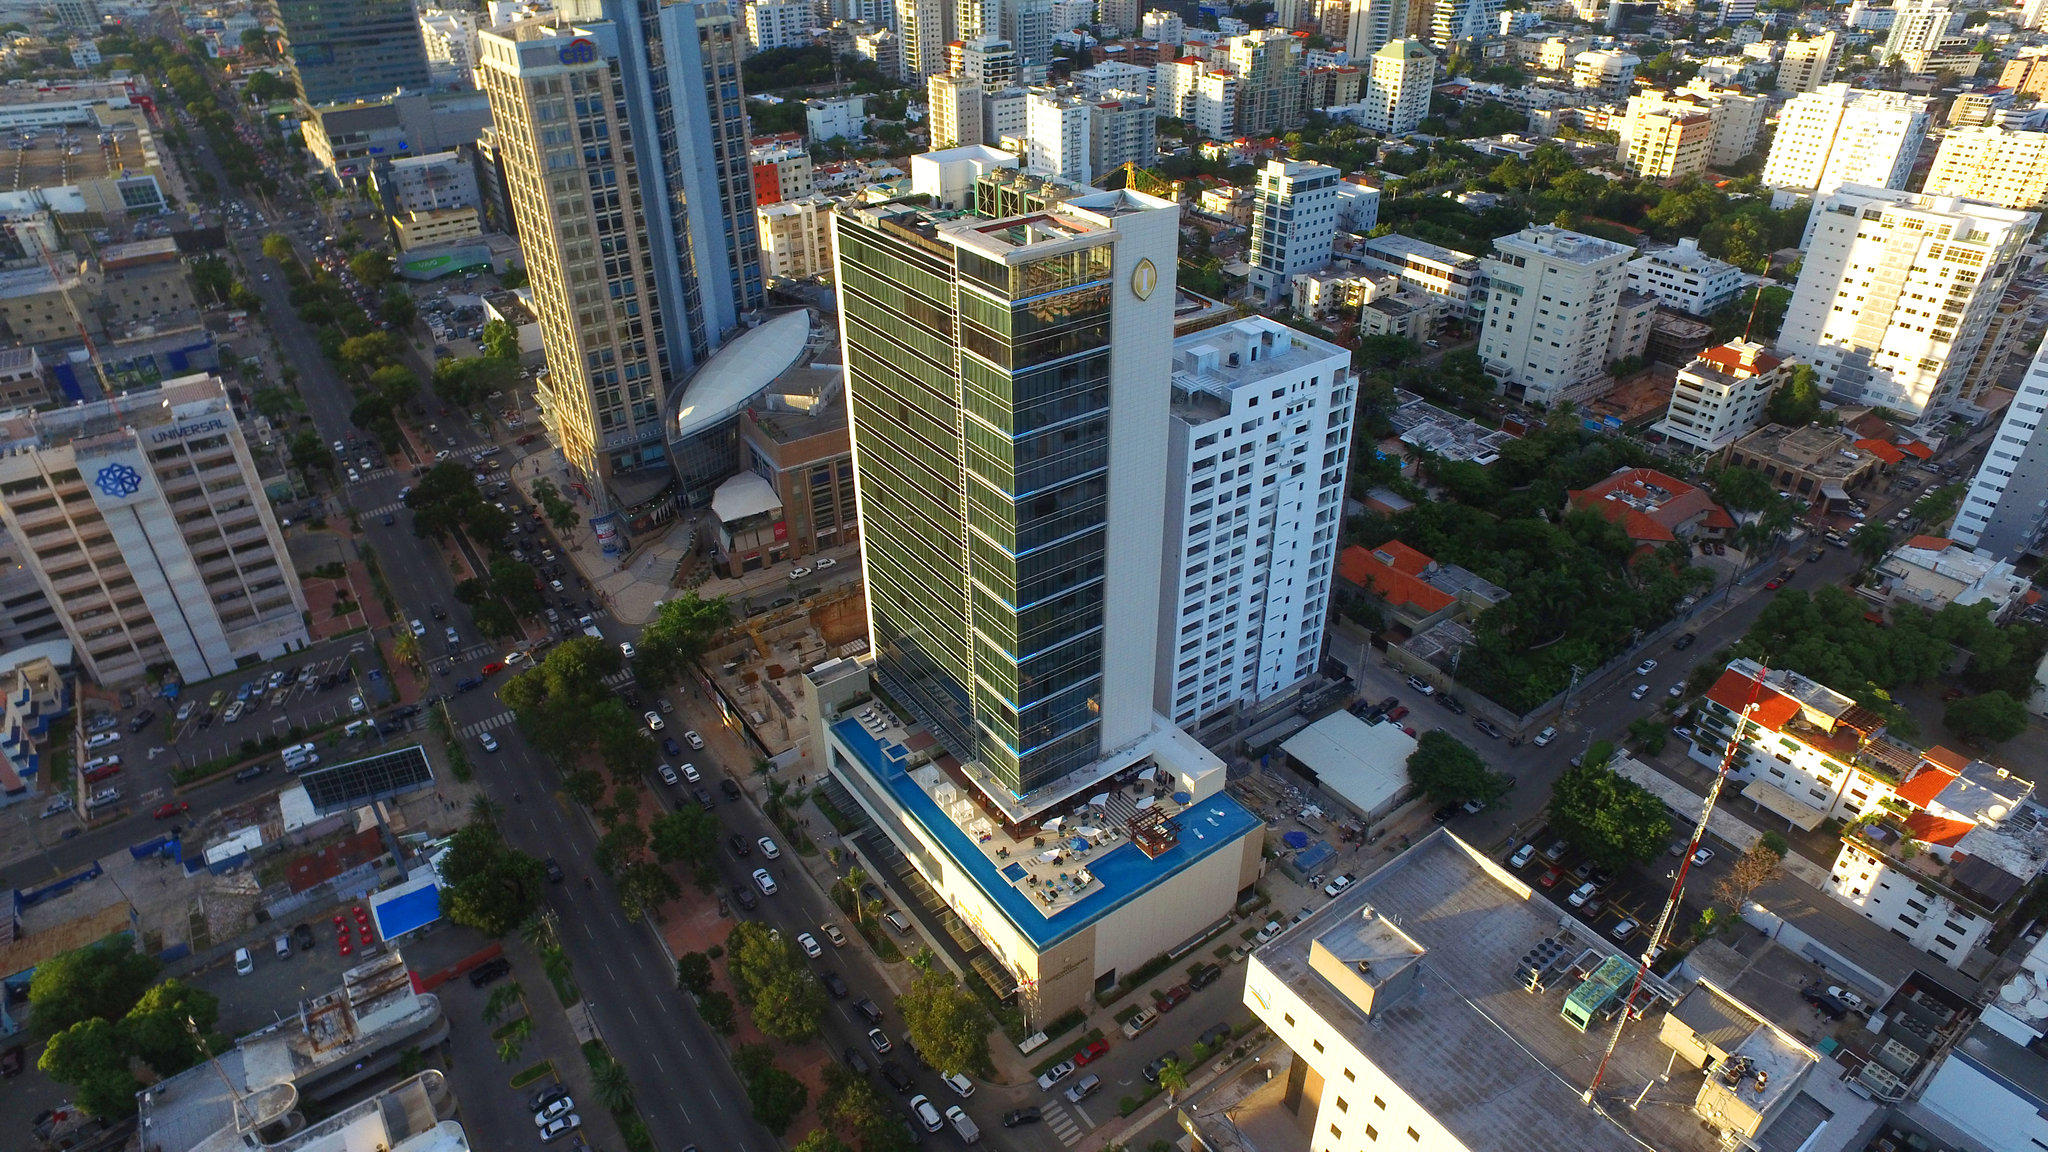 InterContinental Real Santo Domingo, an IHG Hotel